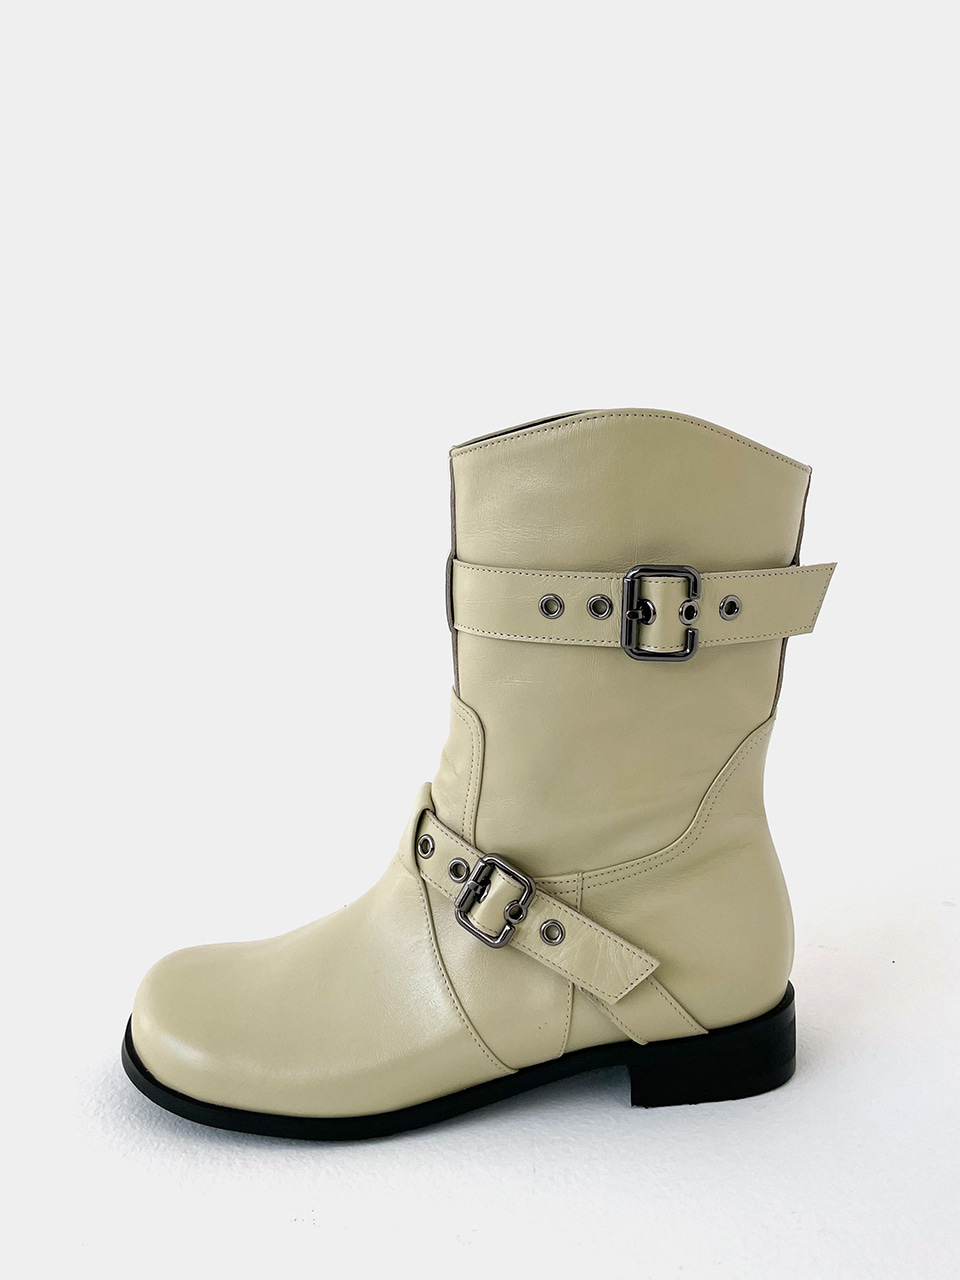 [Exclusive] Mrc092 Nickel Boots (Yellowish-Cream)